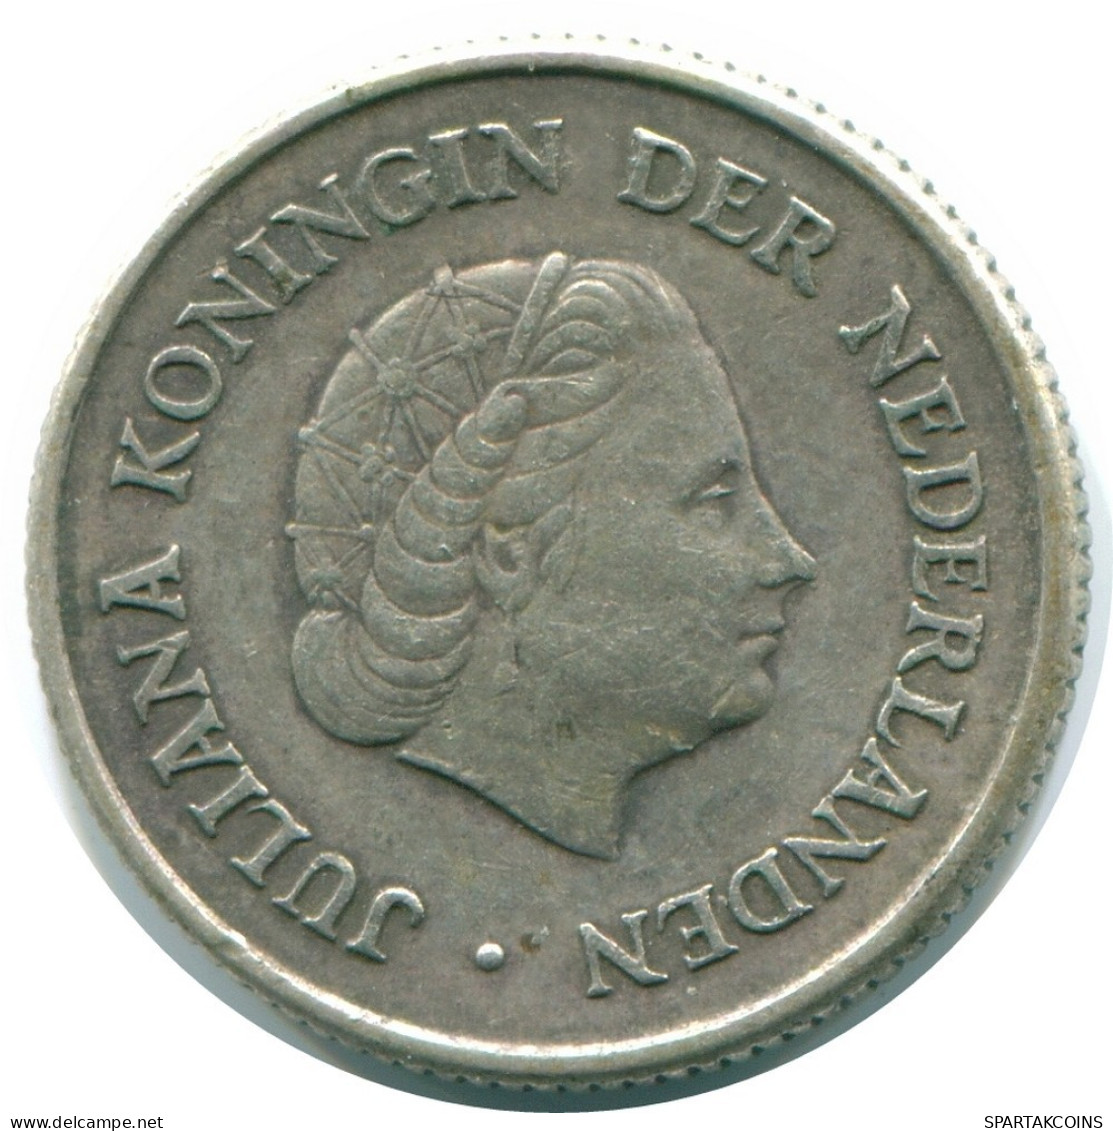 1/4 GULDEN 1967 NETHERLANDS ANTILLES SILVER Colonial Coin #NL11593.4.U.A - Netherlands Antilles